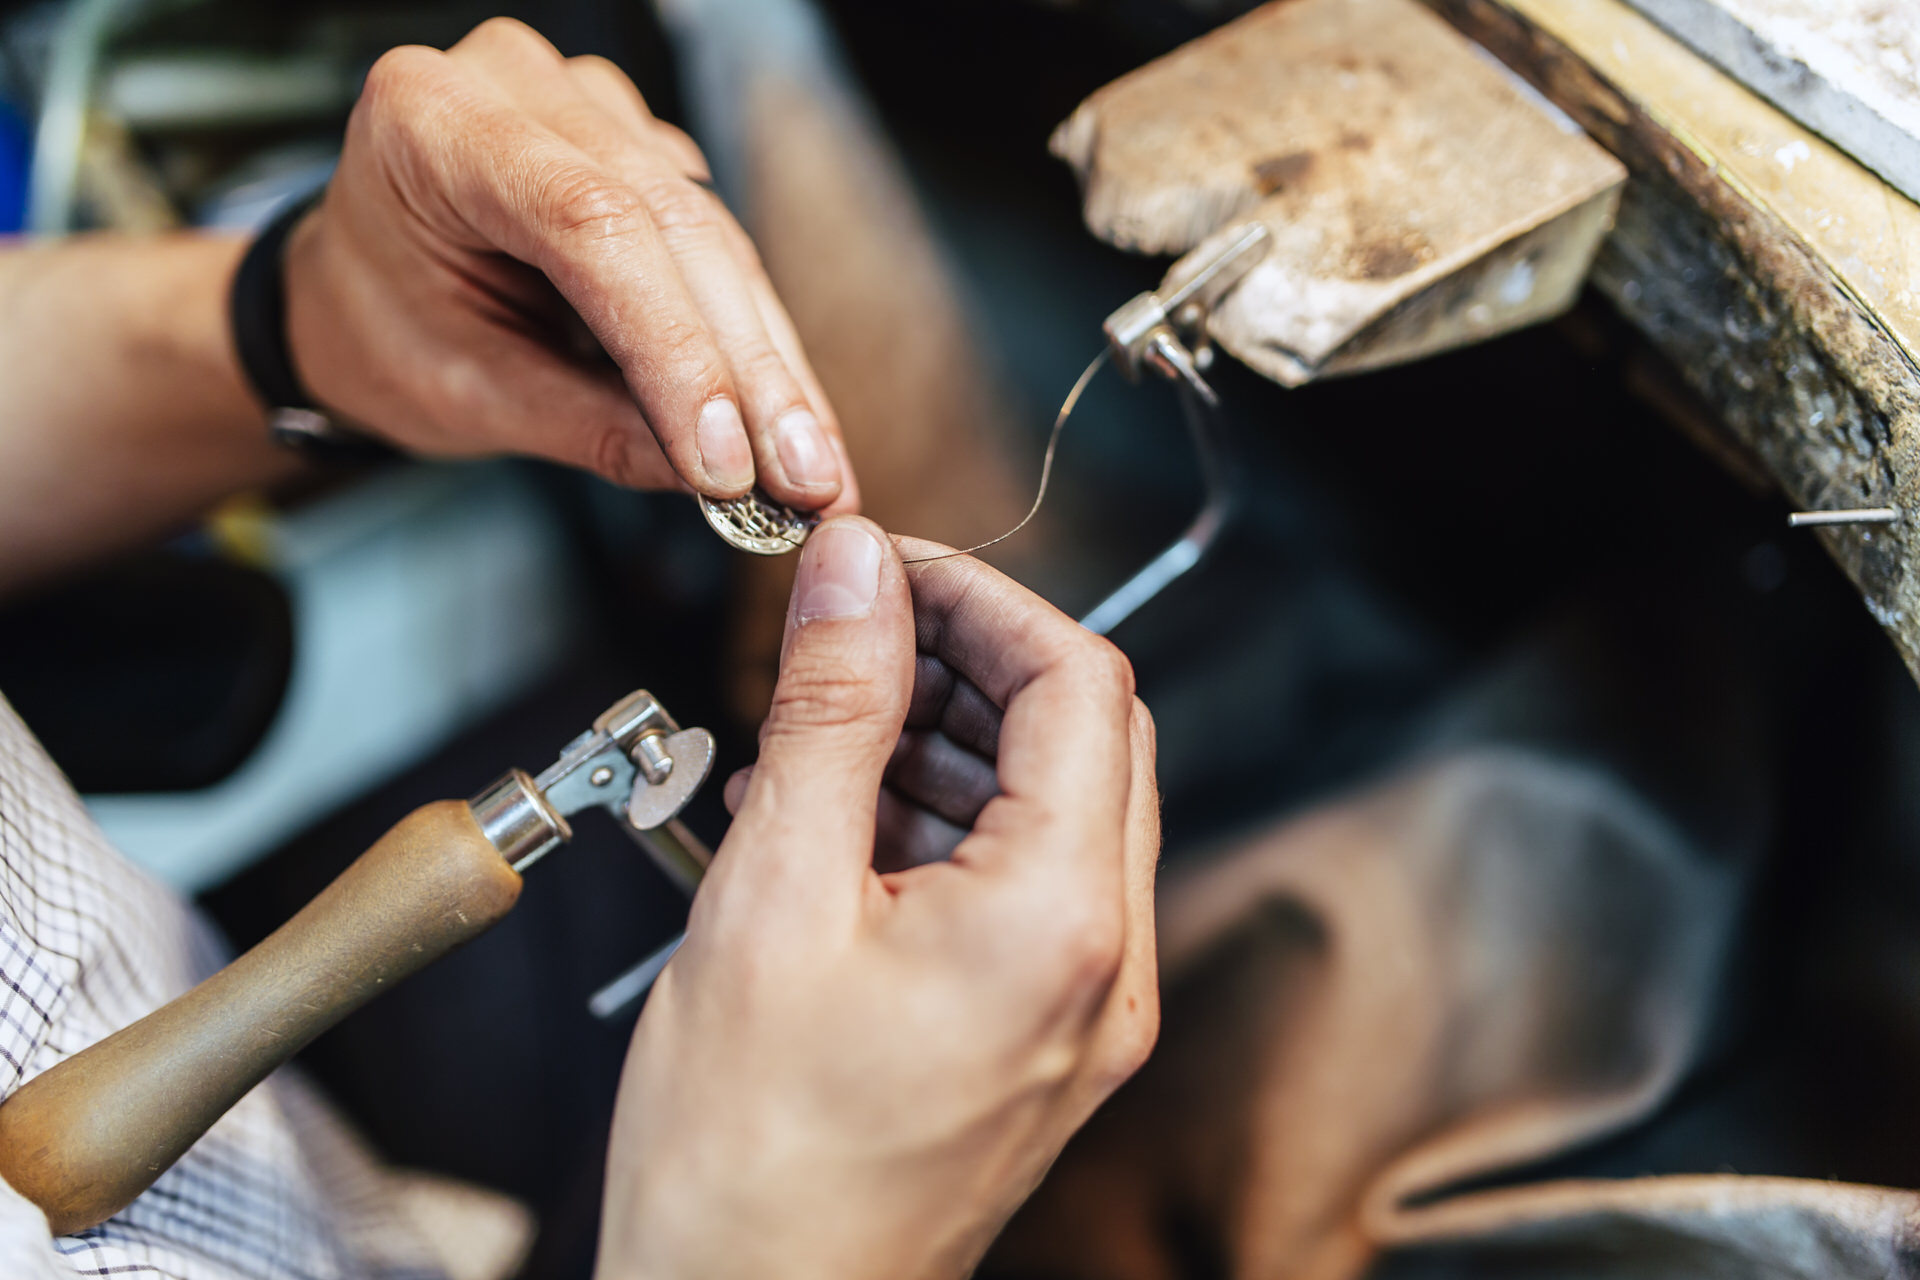 Jewelry Repair Service » Gosia Meyer Jewelry